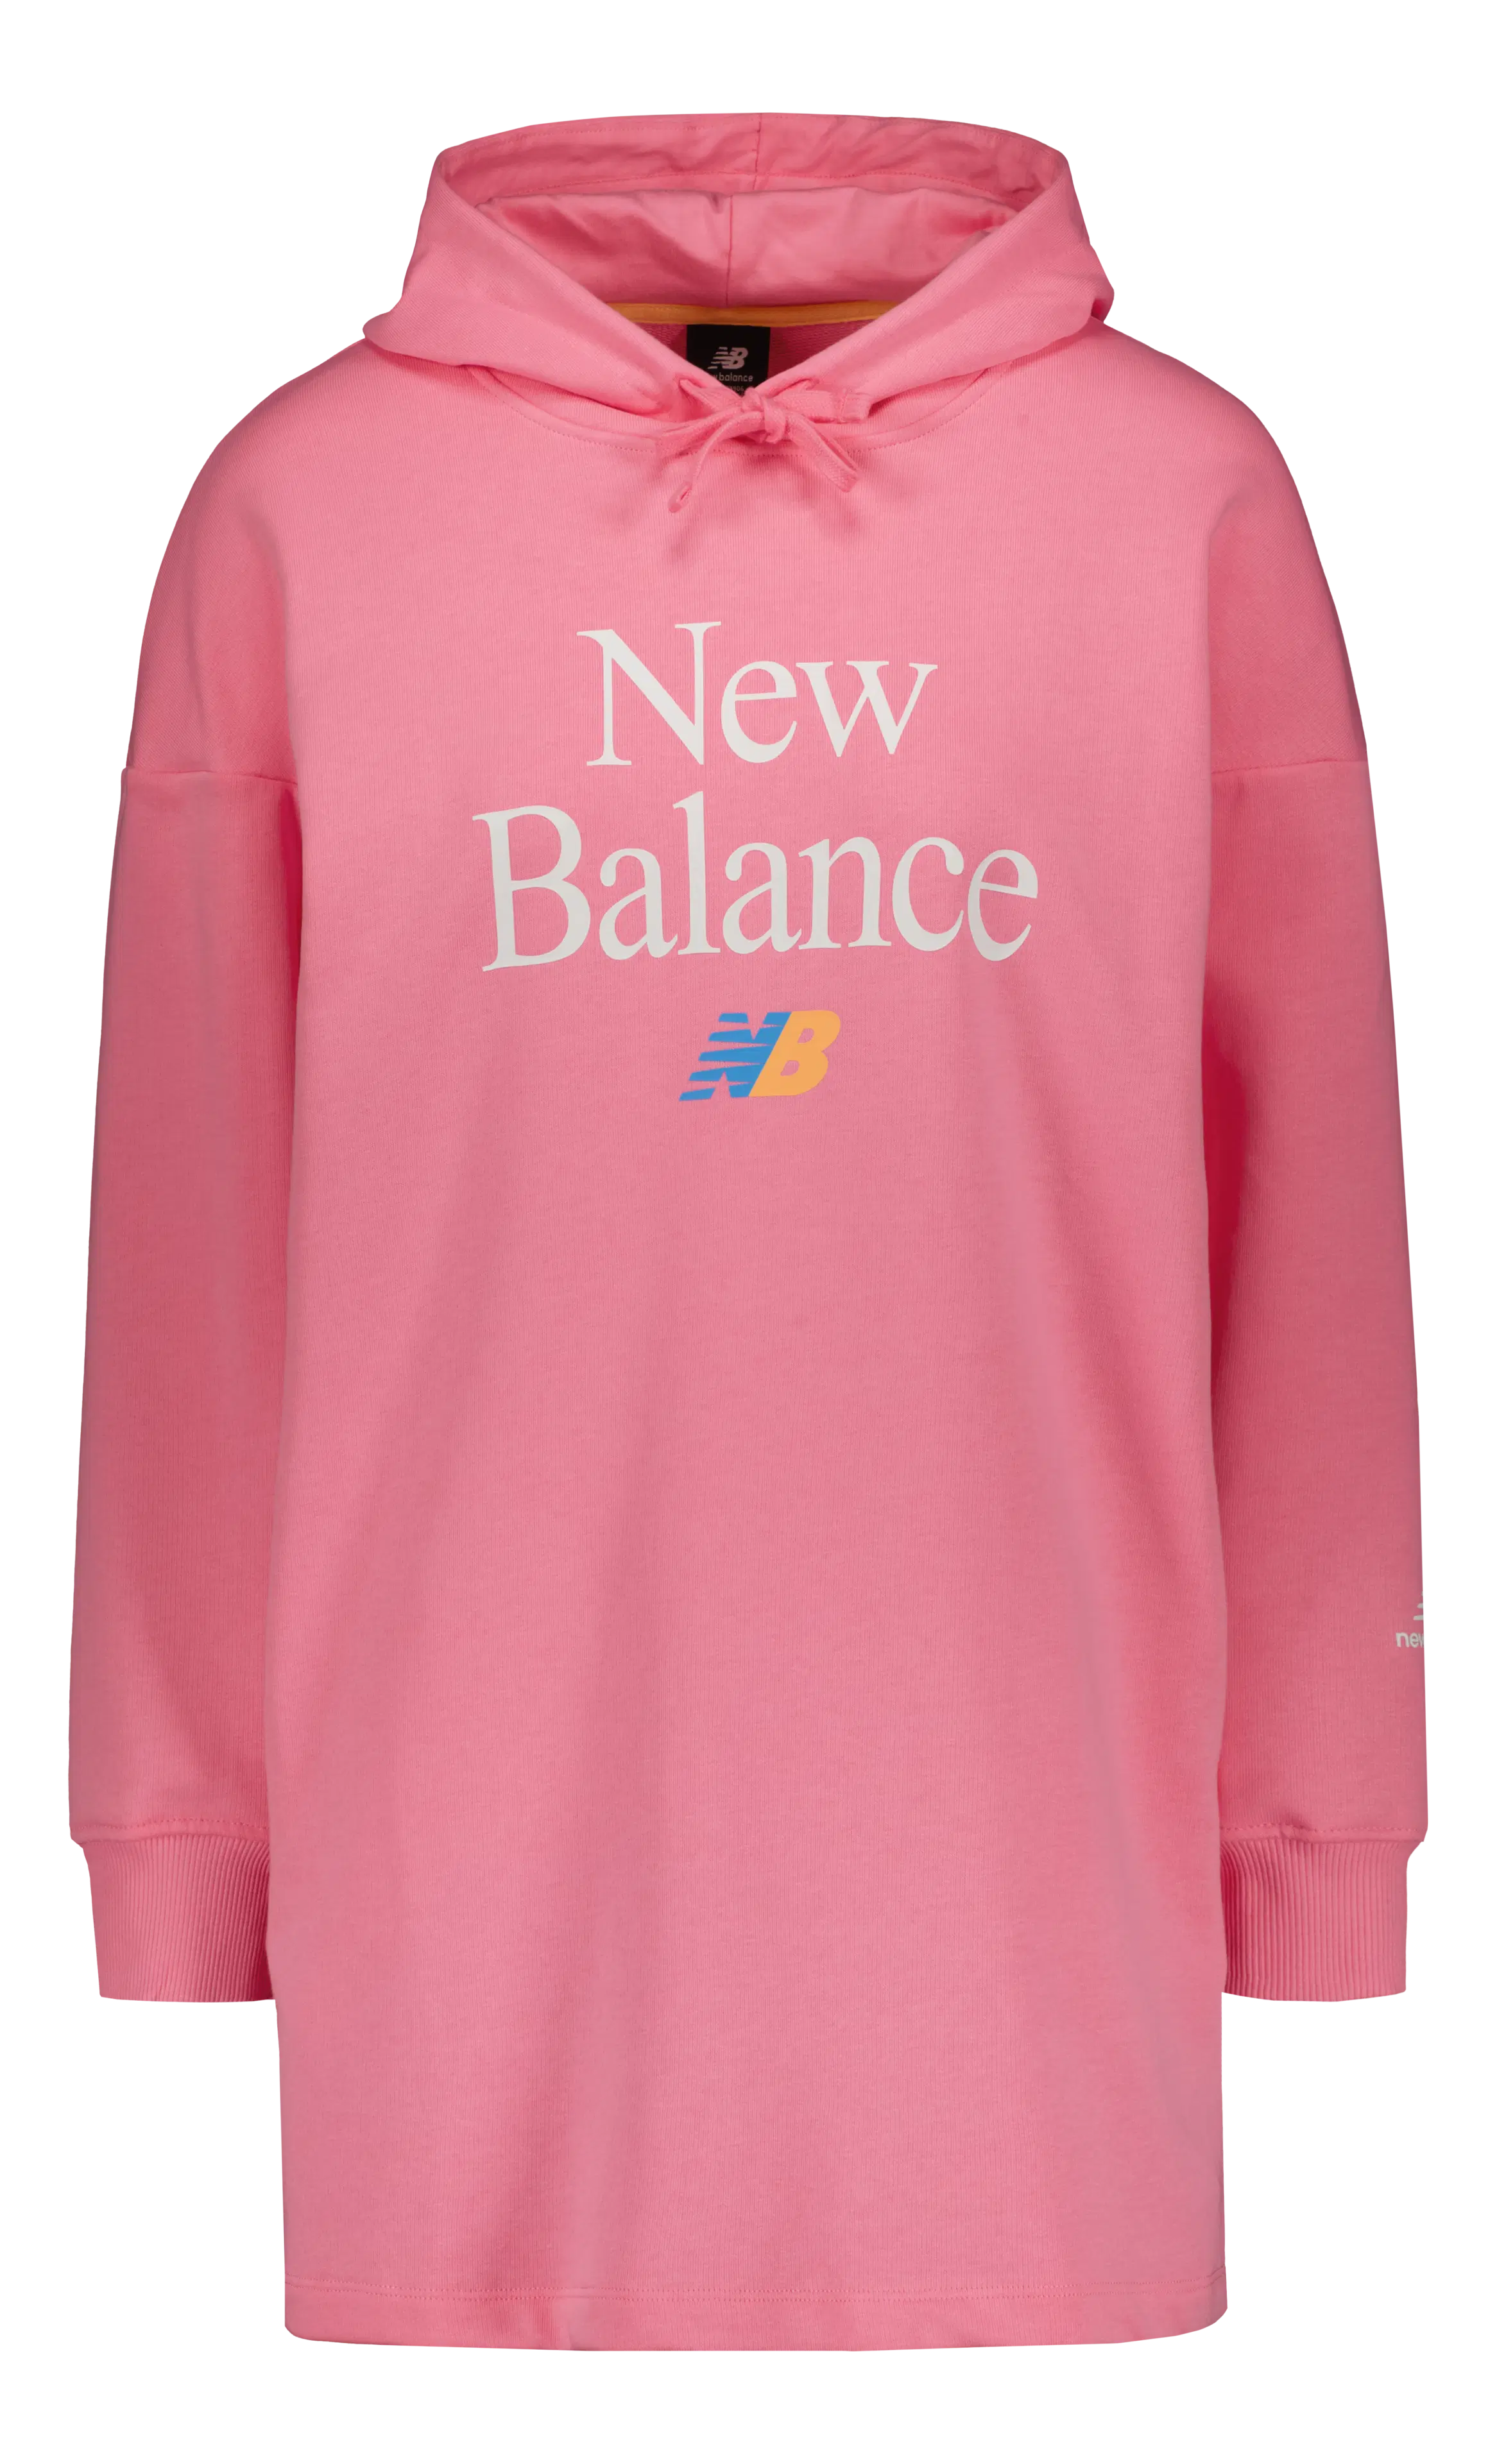 New Balance mekko